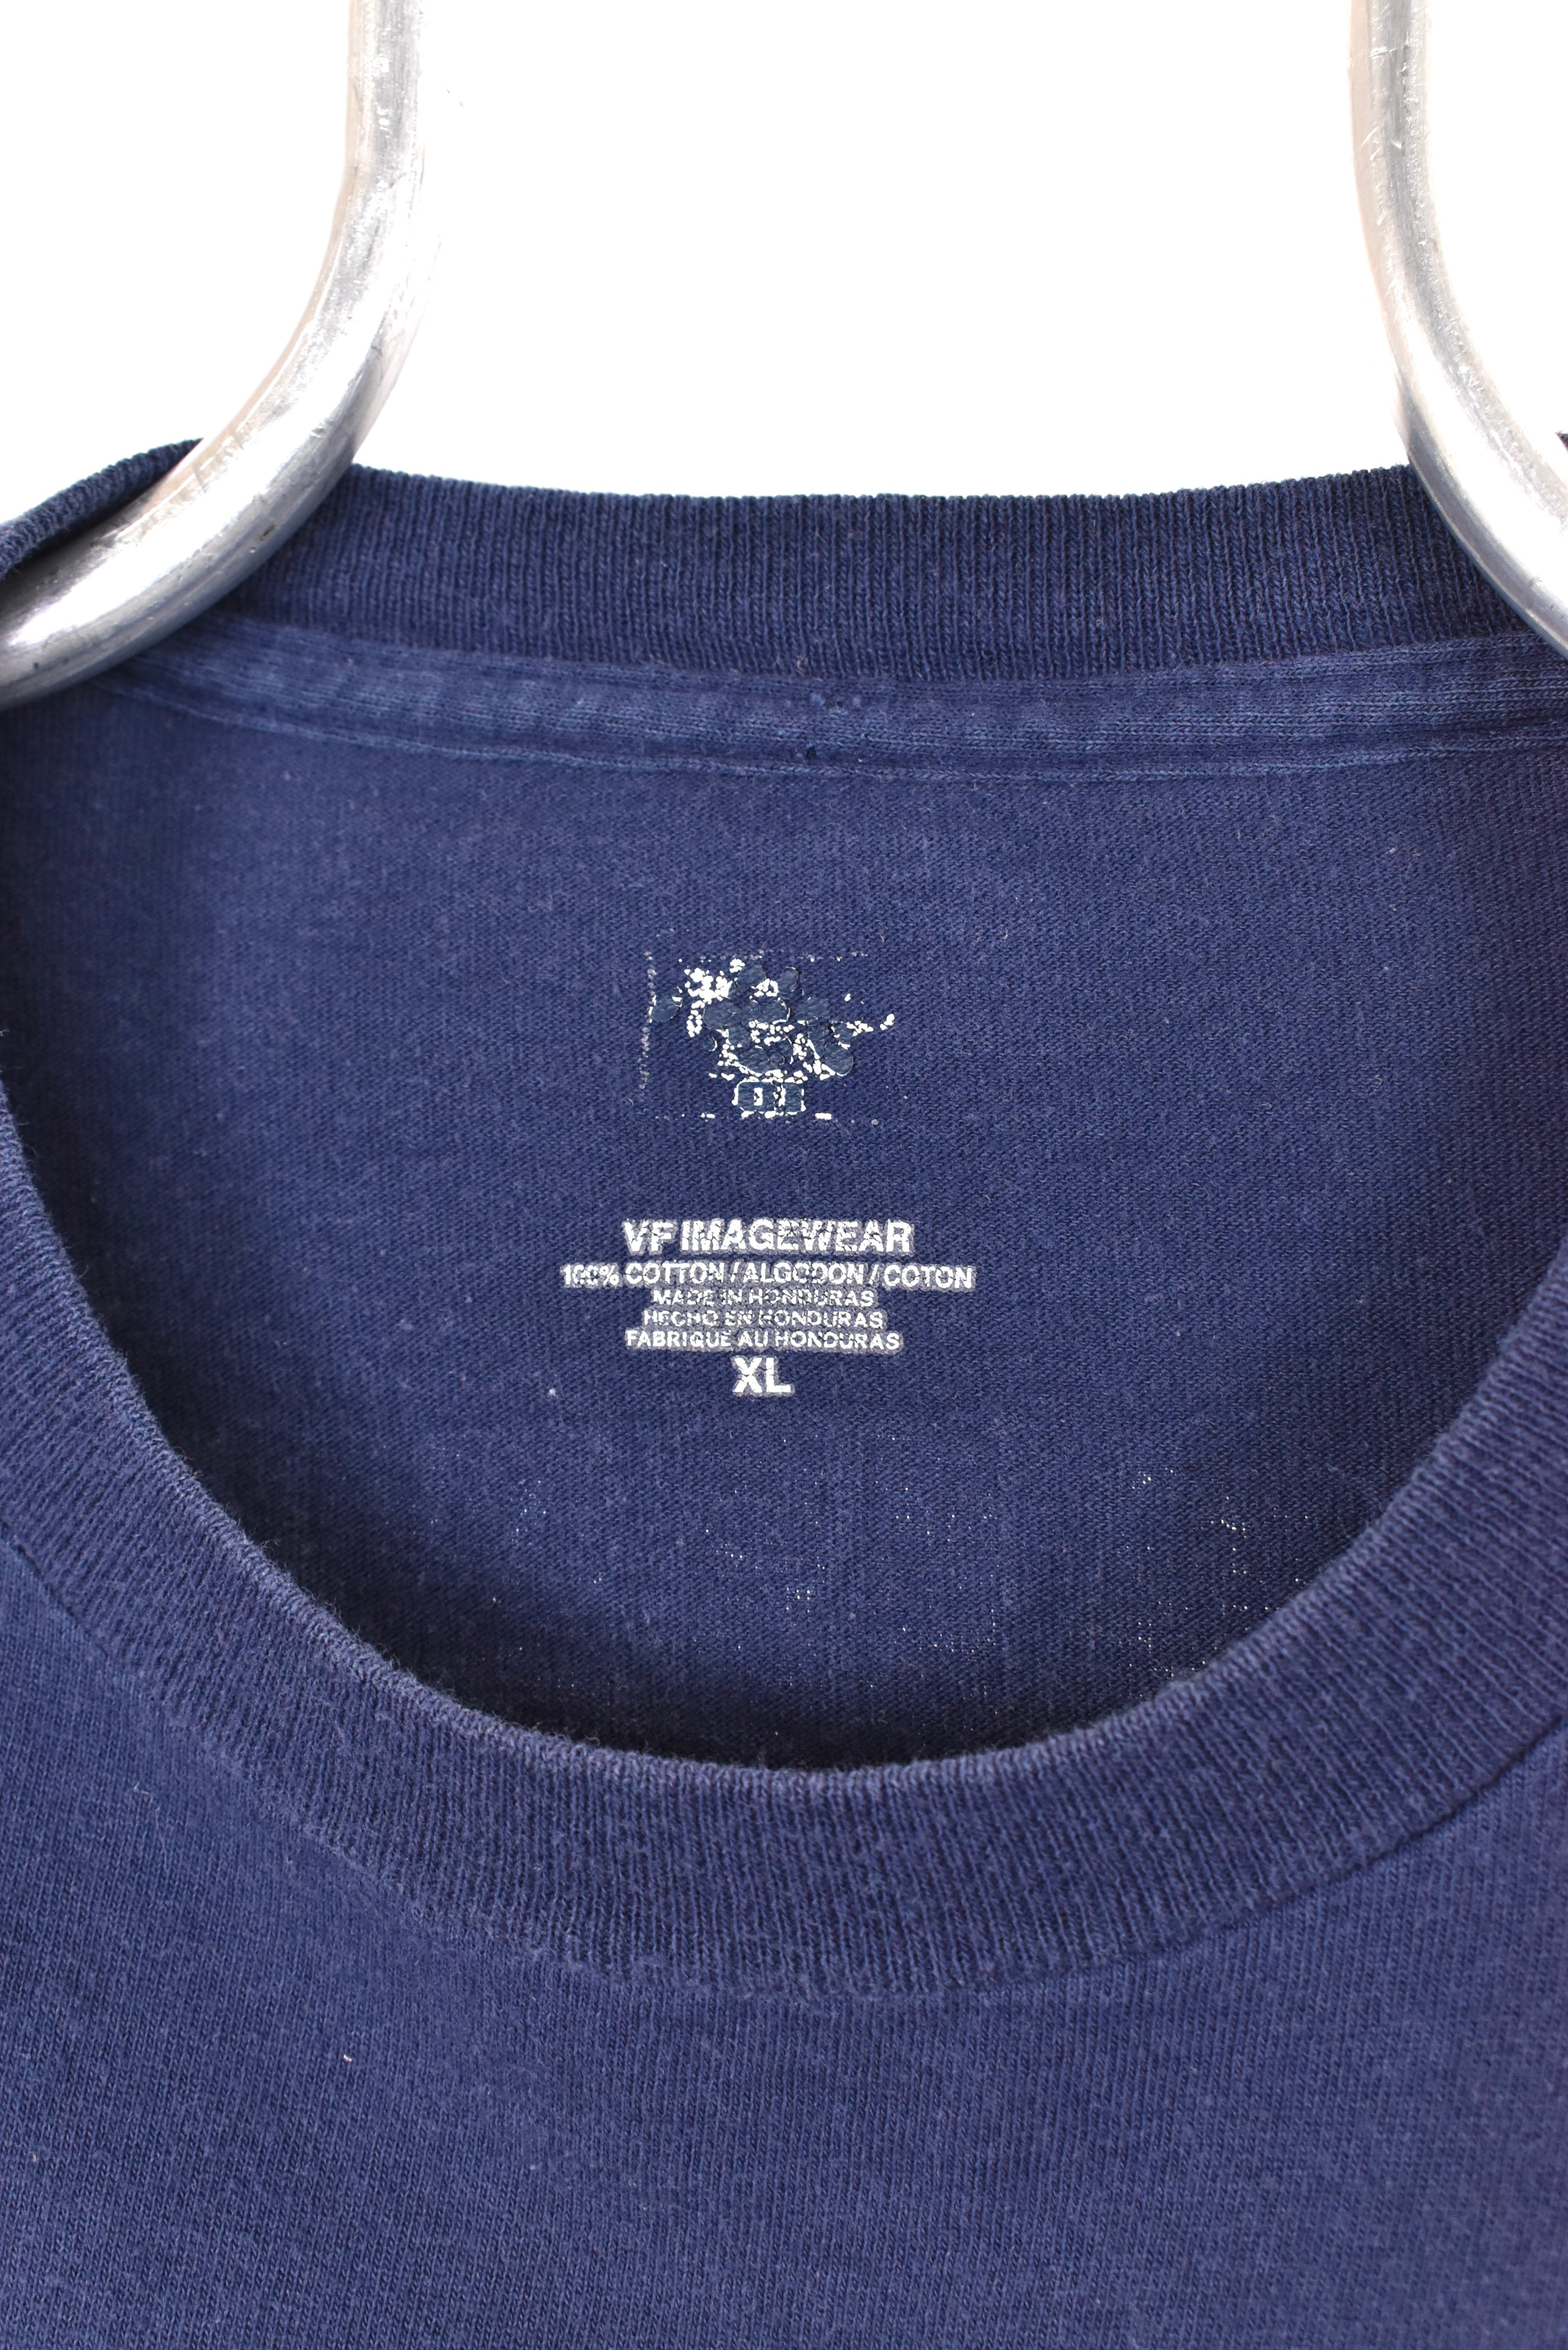 Vintage Minnesota Twins shirt, MLB navy blue graphic tee - AU Medium PRO SPORT